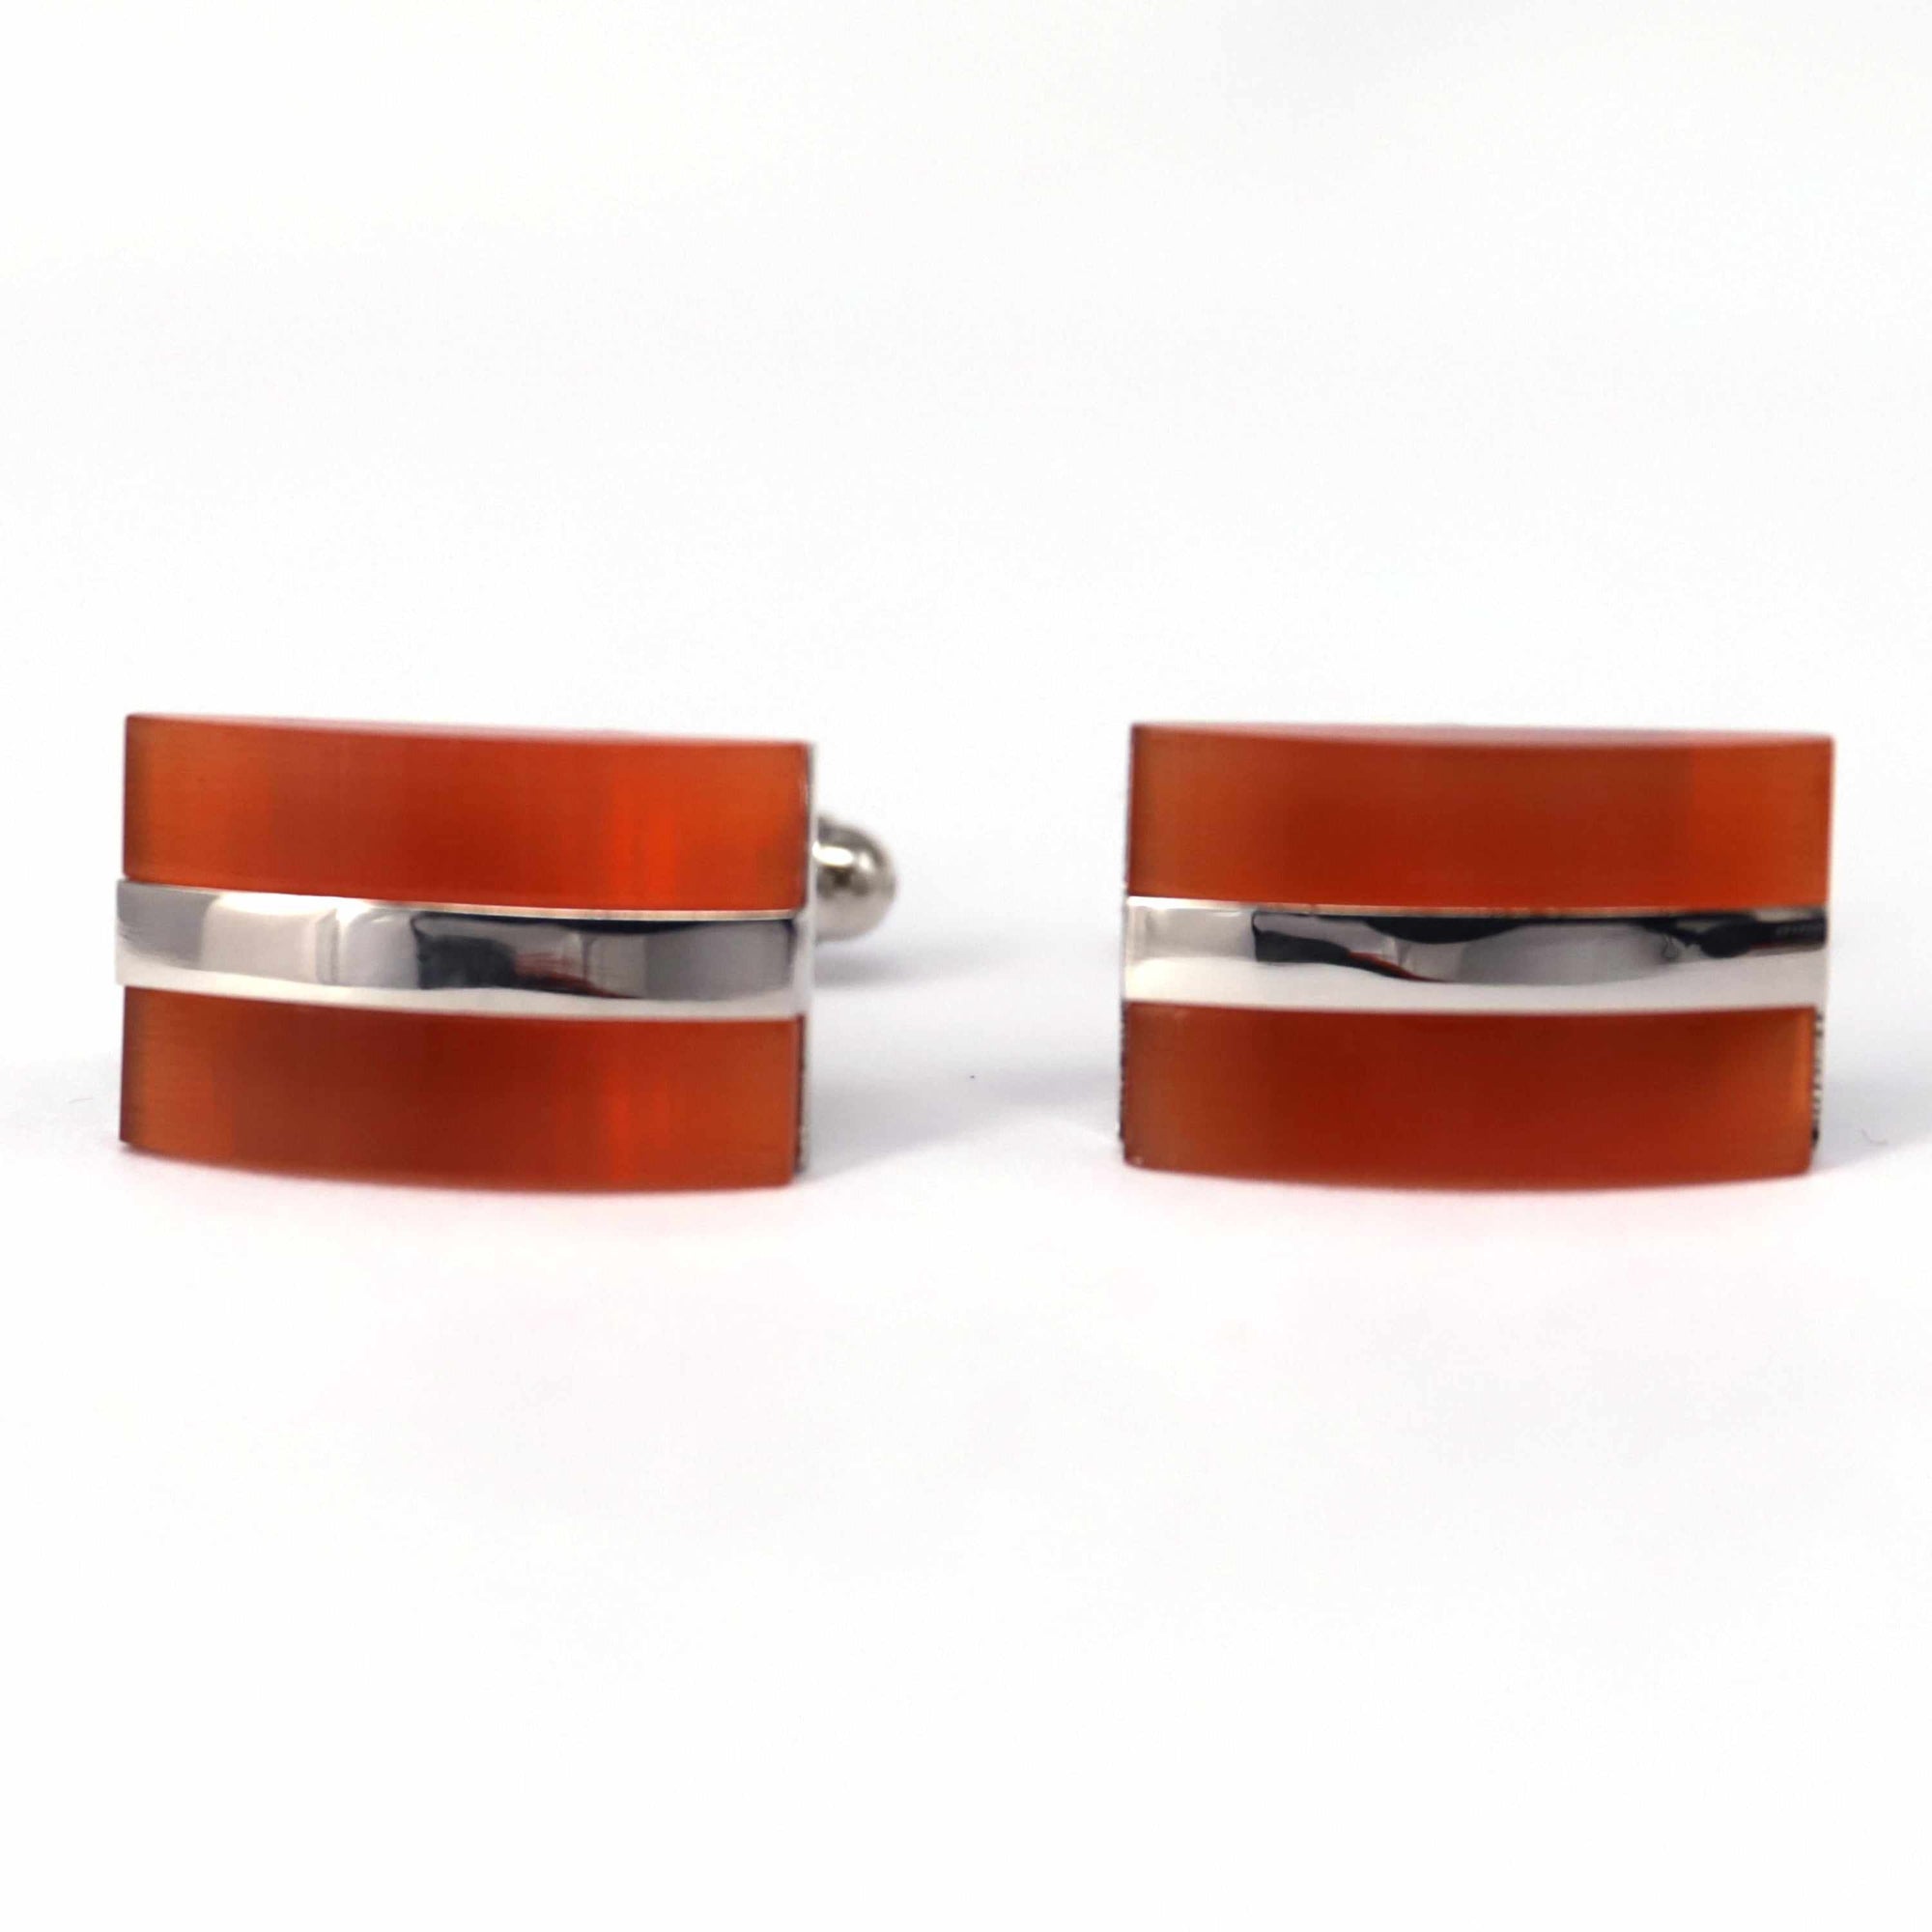 Rectangular Orange Fiber Glass Cufflinks with Silver Inserts-Cufflinks.com.sg